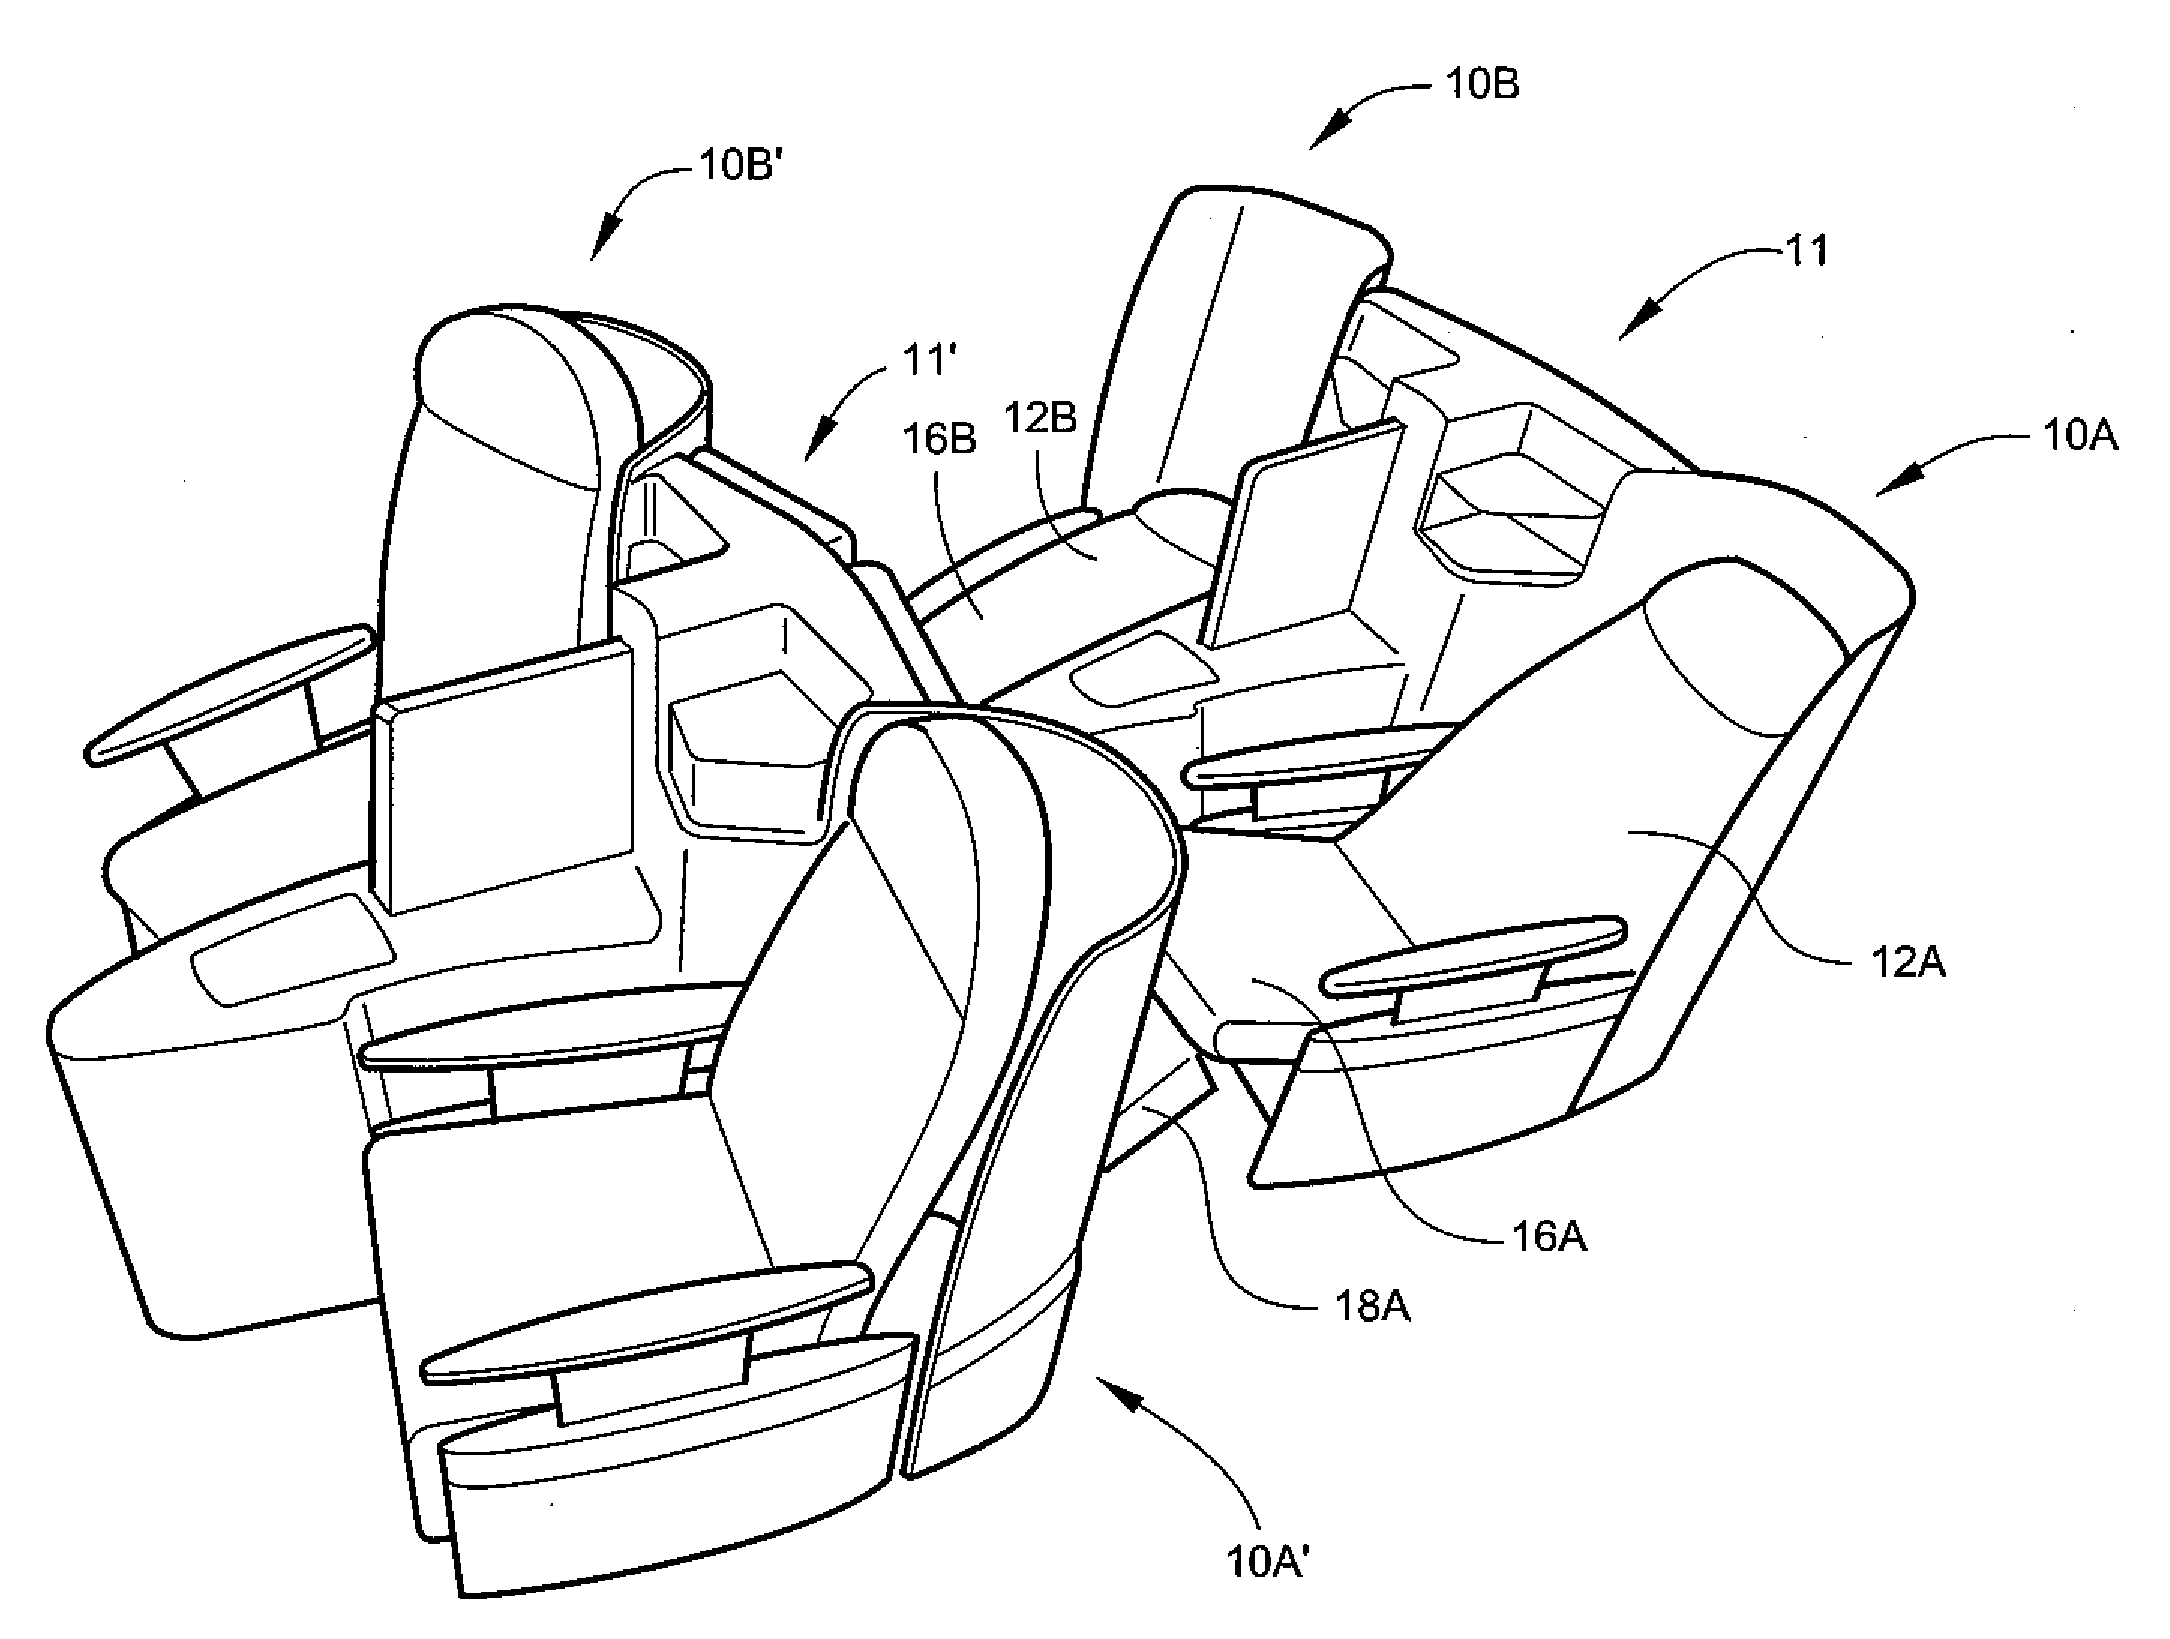 Passenger seating arrangement